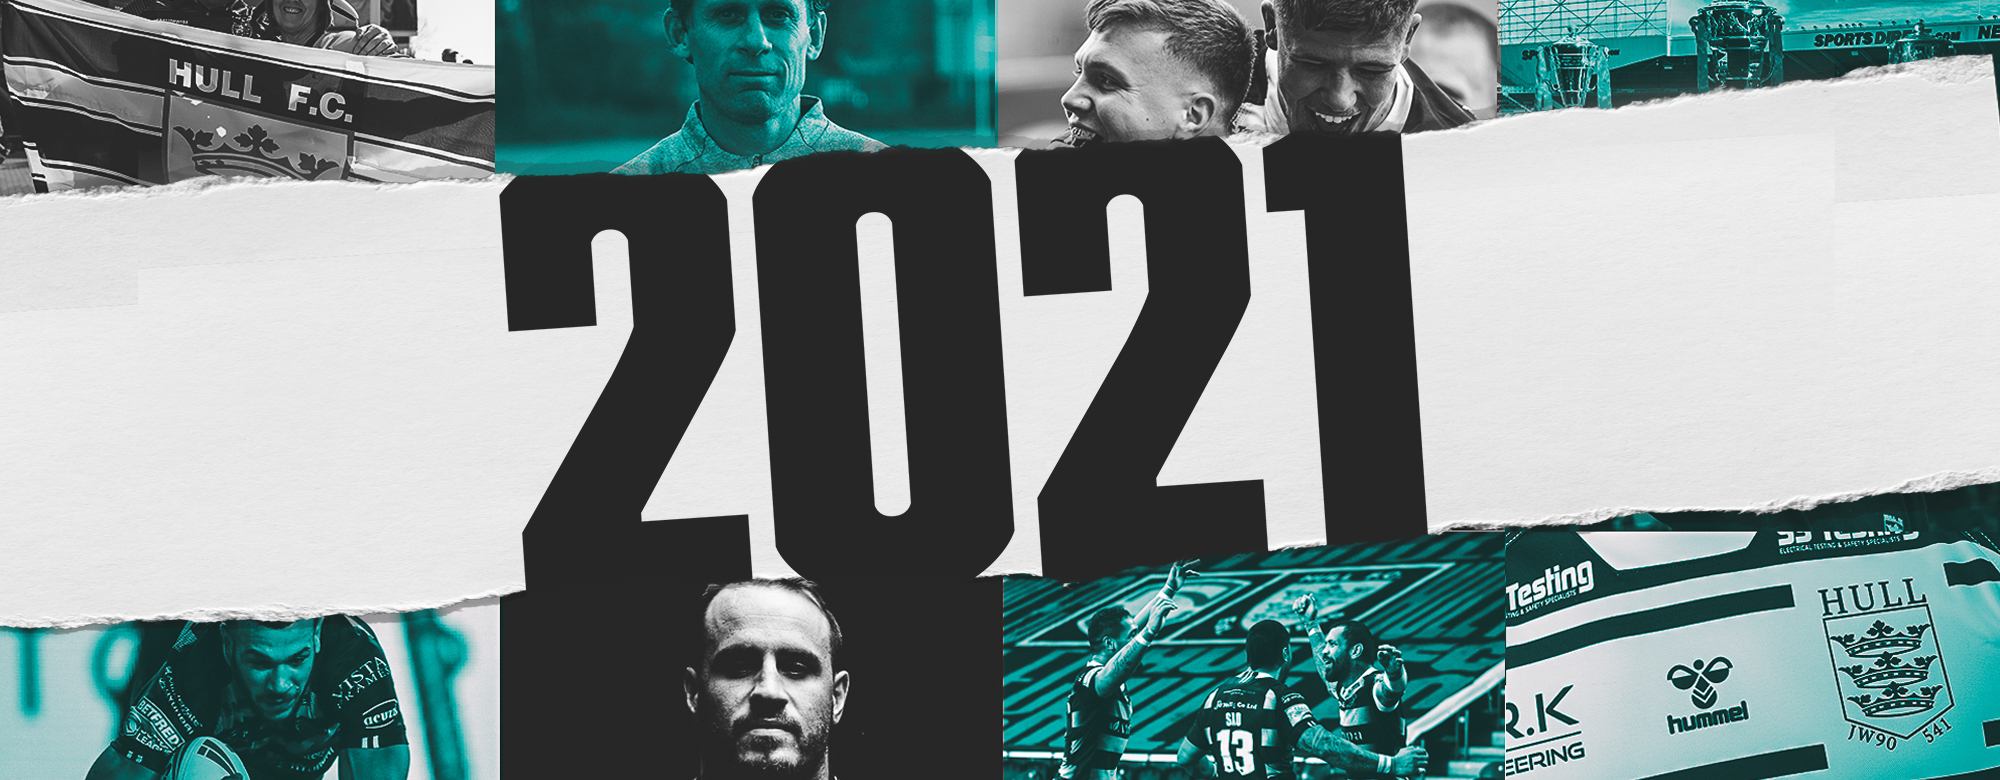 Hull FC: Looking Forward To 2021